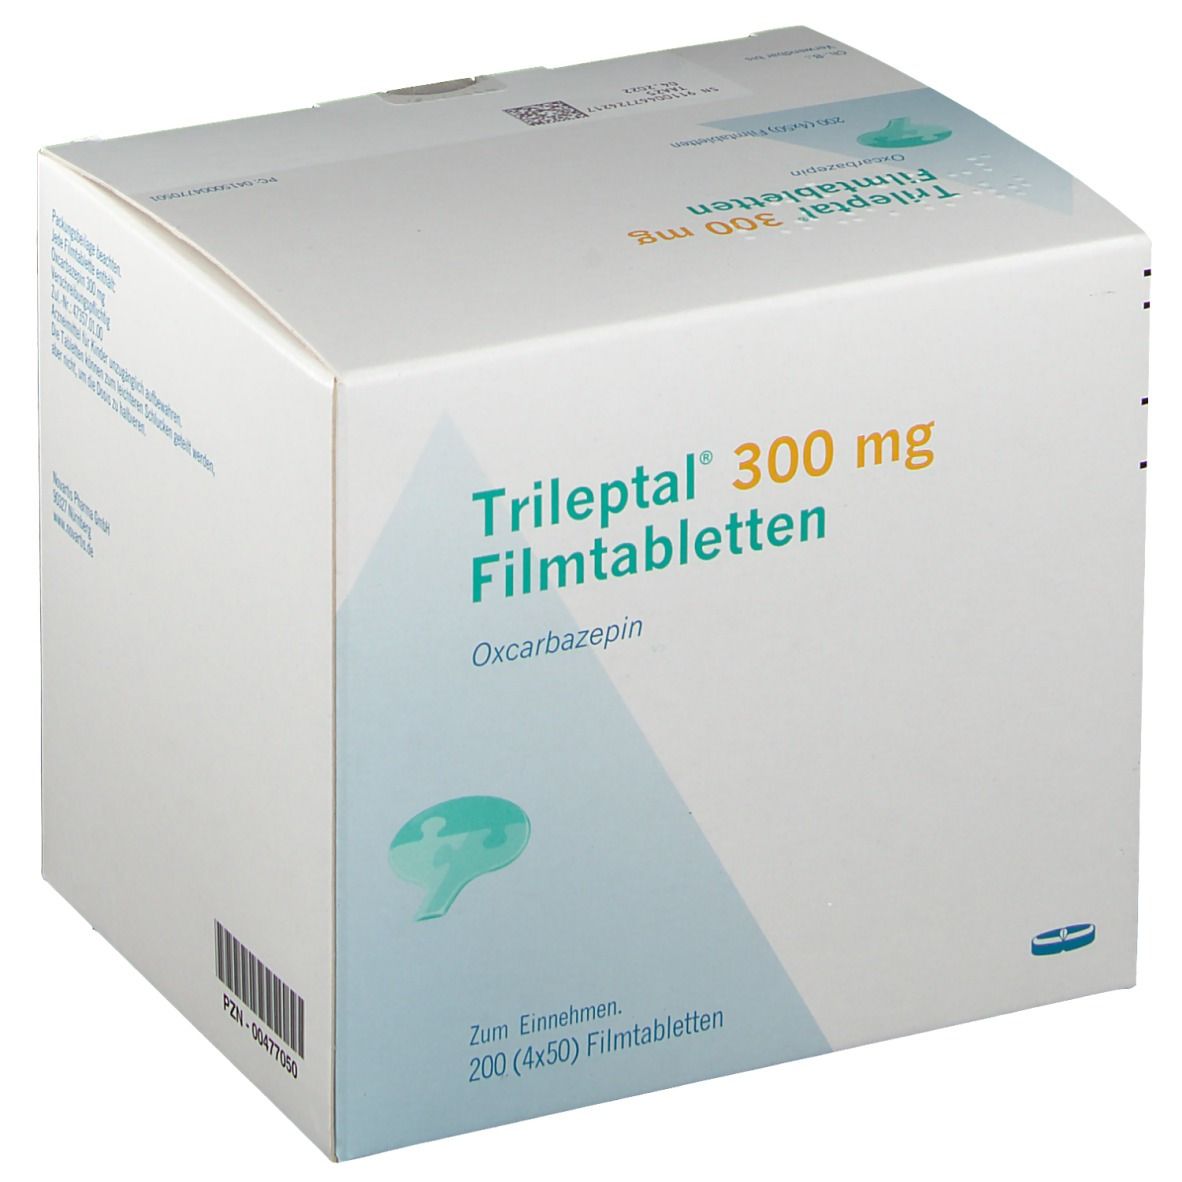 Trileptal® 300 mg